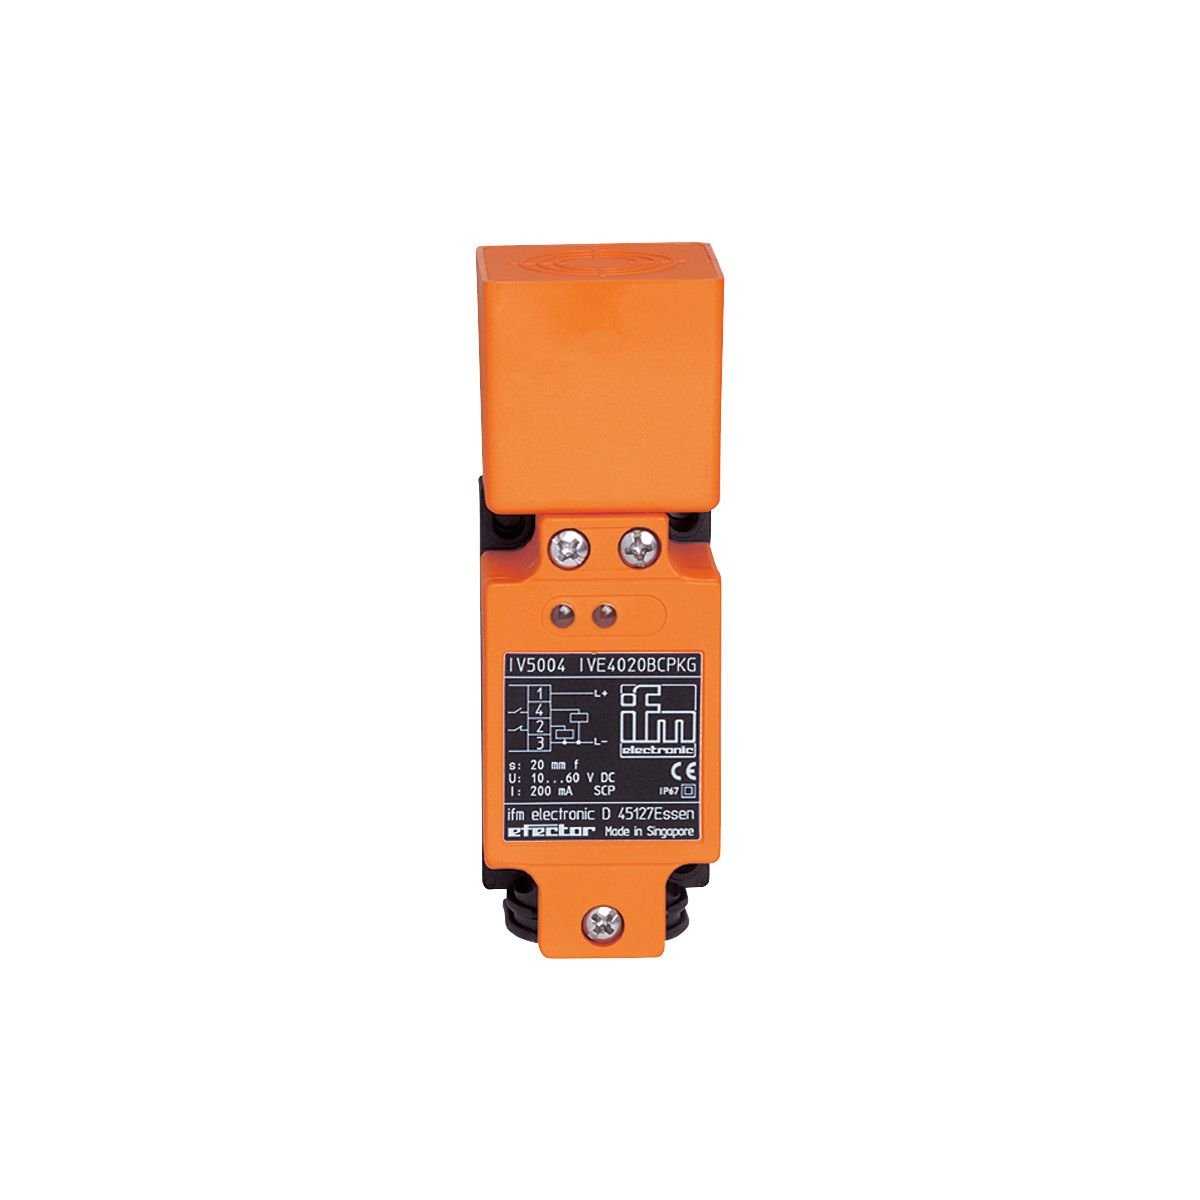 IV5004 , IFM พร็อกซิมิตี้สวิทช์/ ทรงสี่เหลี่ยม/ ระยะตรวจจับ 20mm (ifm inductive proximity sensor/ ifm proximity switch)